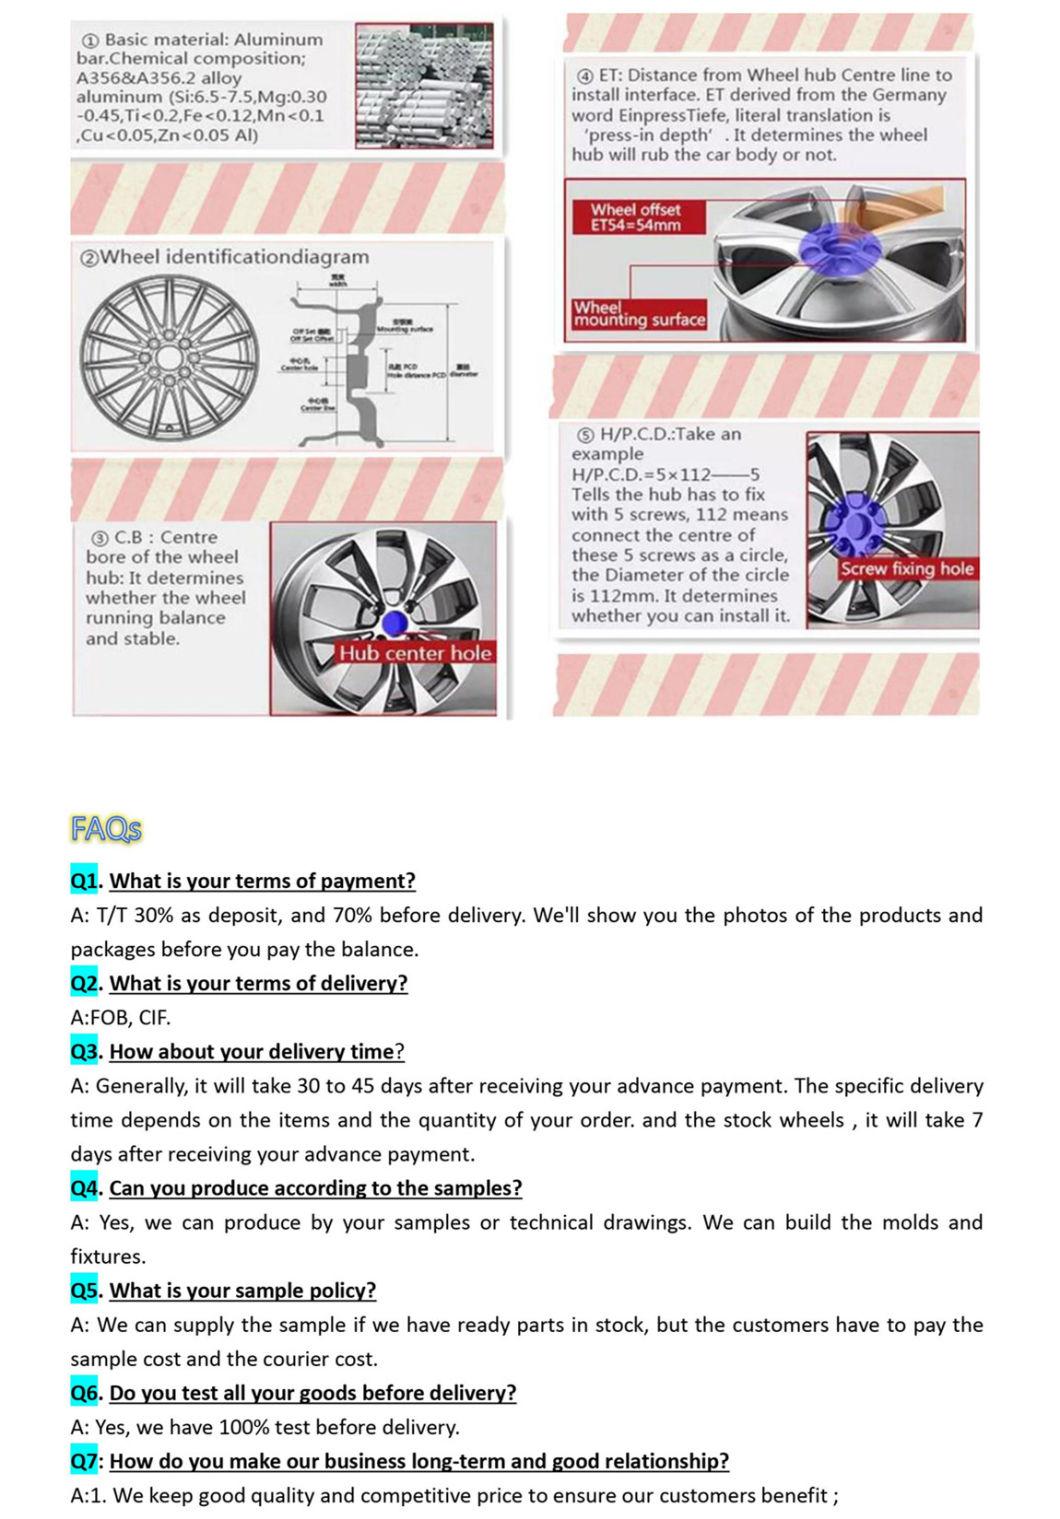 Replica Wheels Passenger Car Alloy Wheel Rims Full Size Available for Daewoo